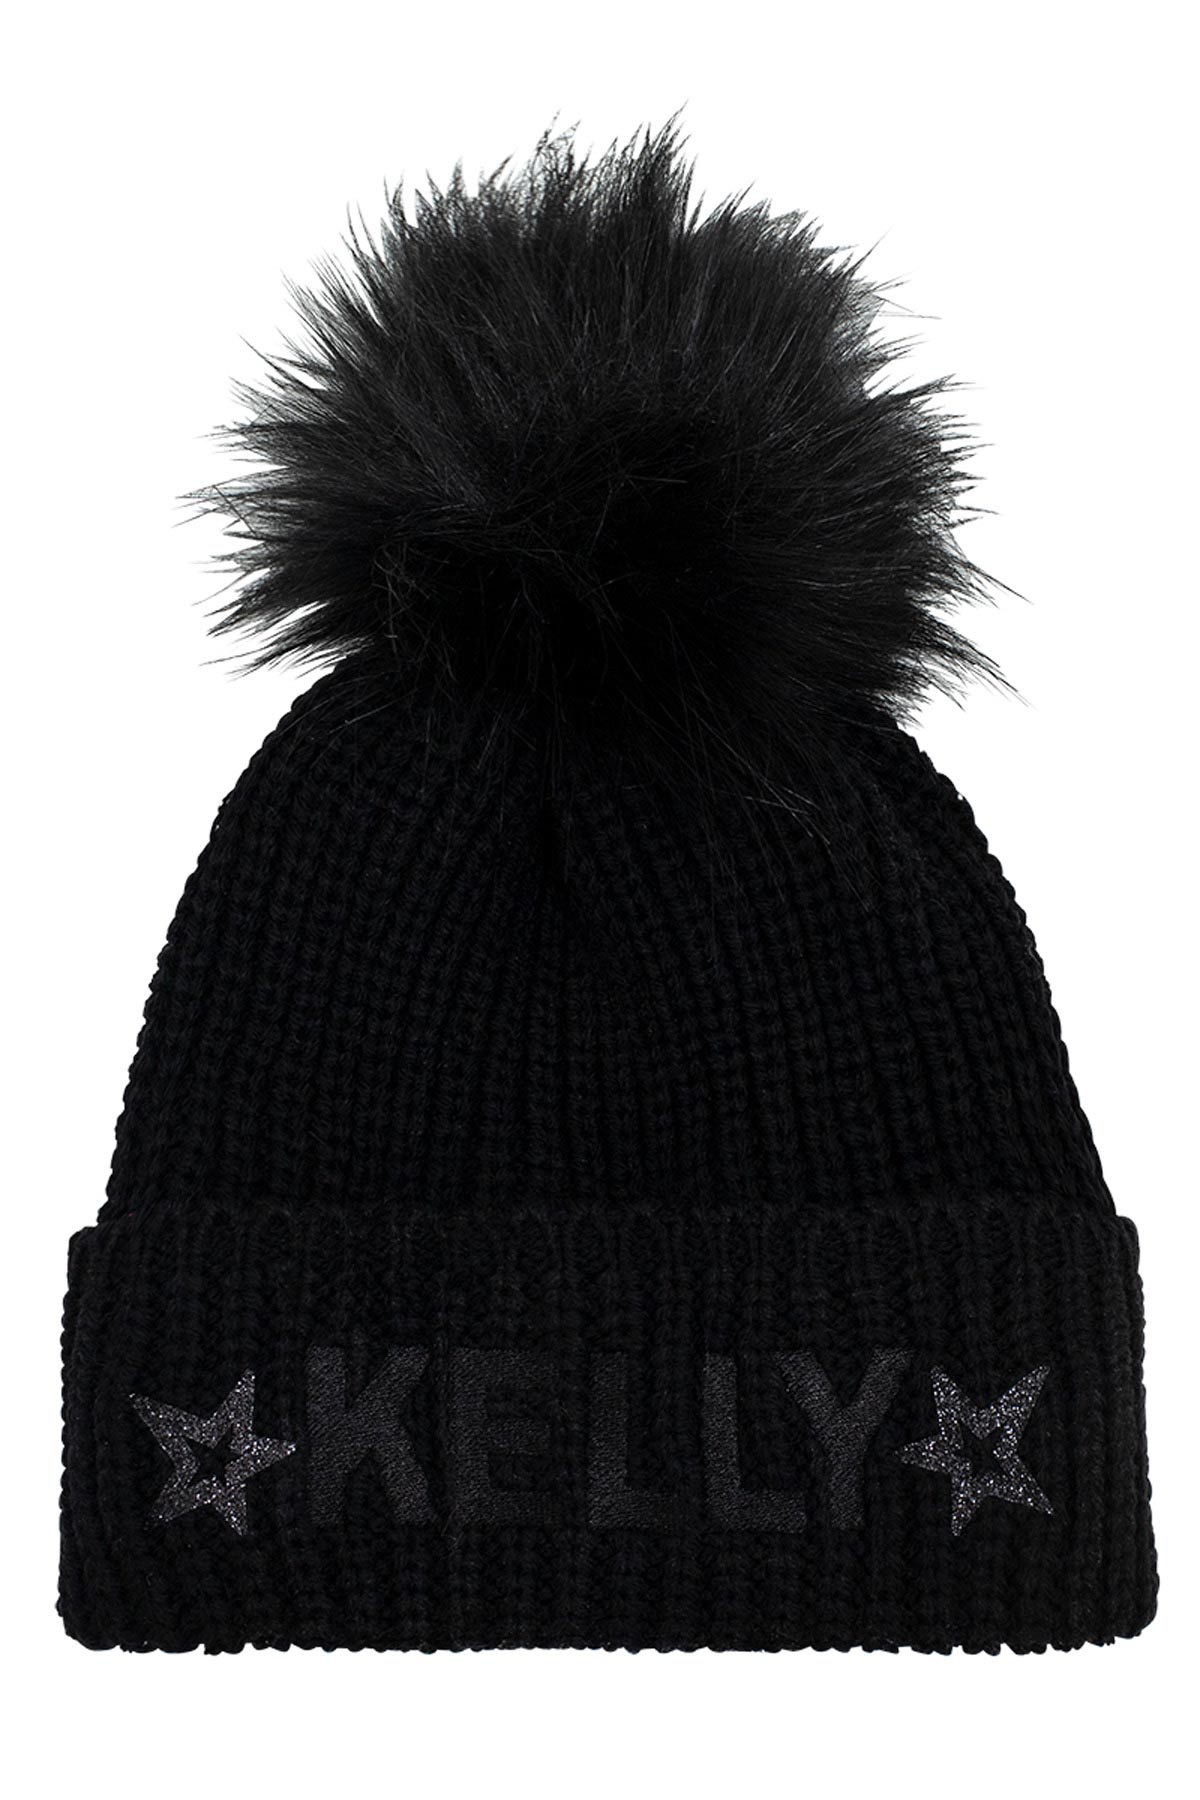 Kelly Goya Black Faux Fur Pom Pom Hat with Sequins